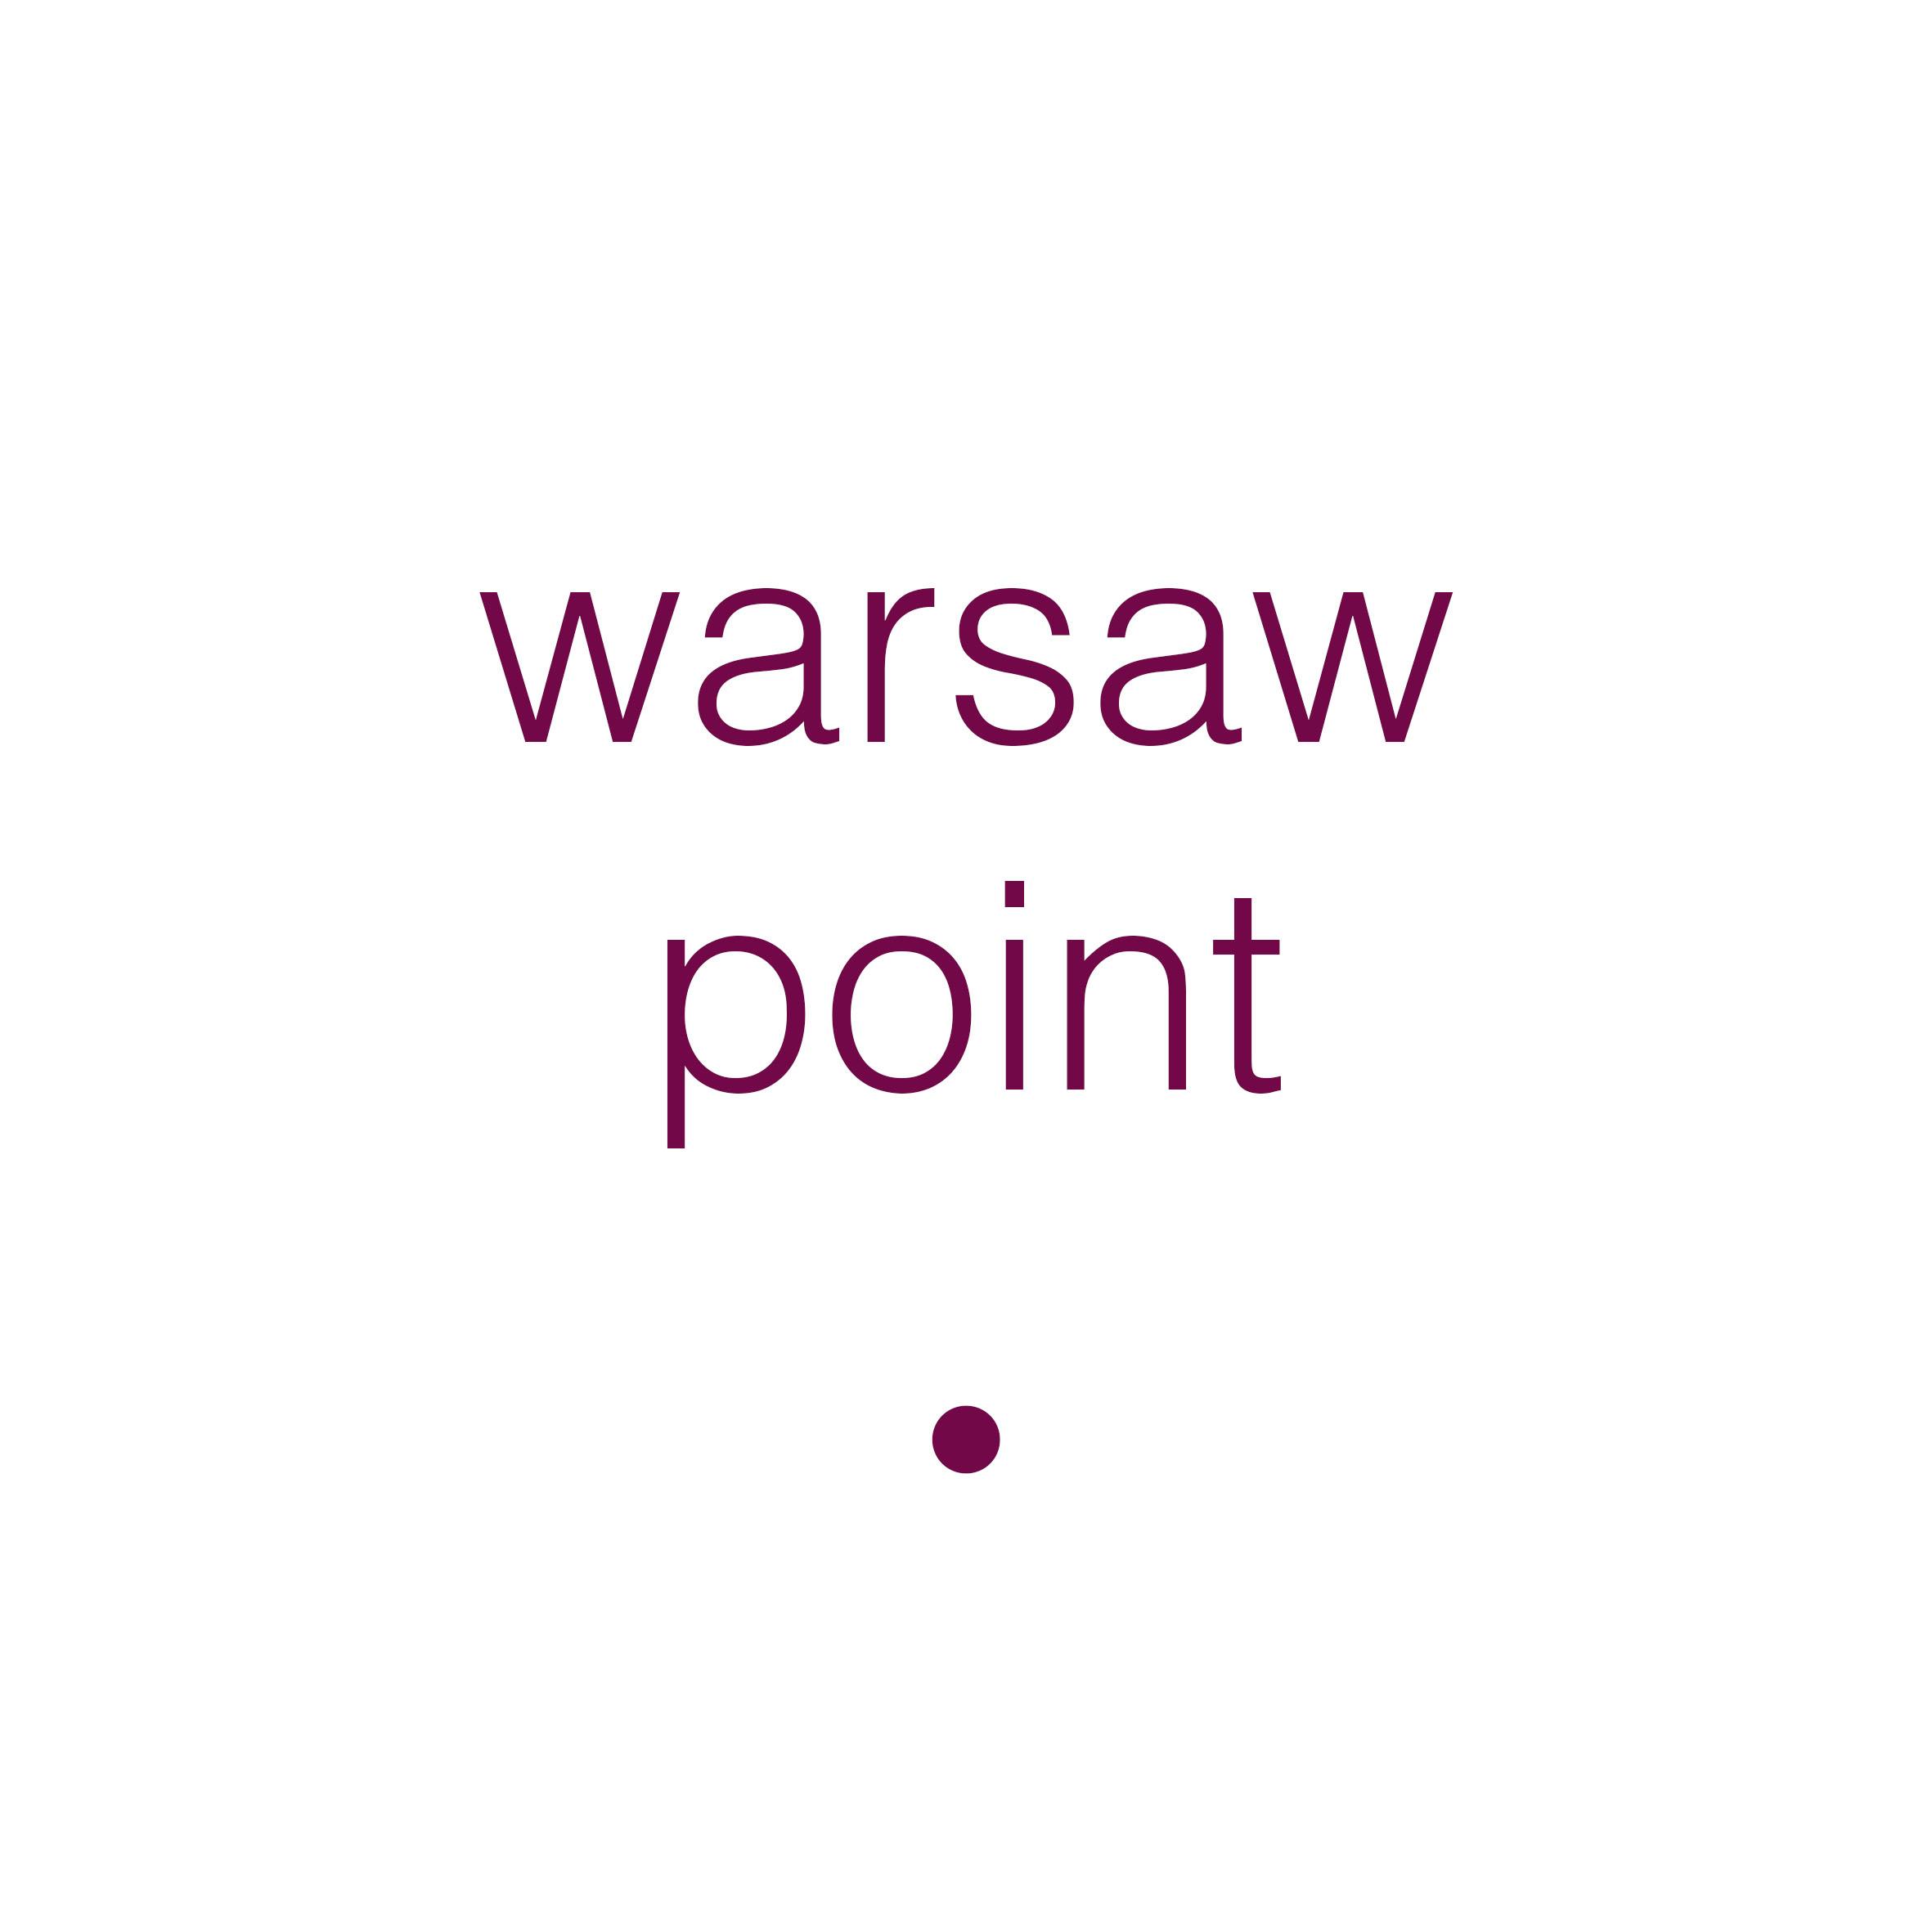 warsaw point